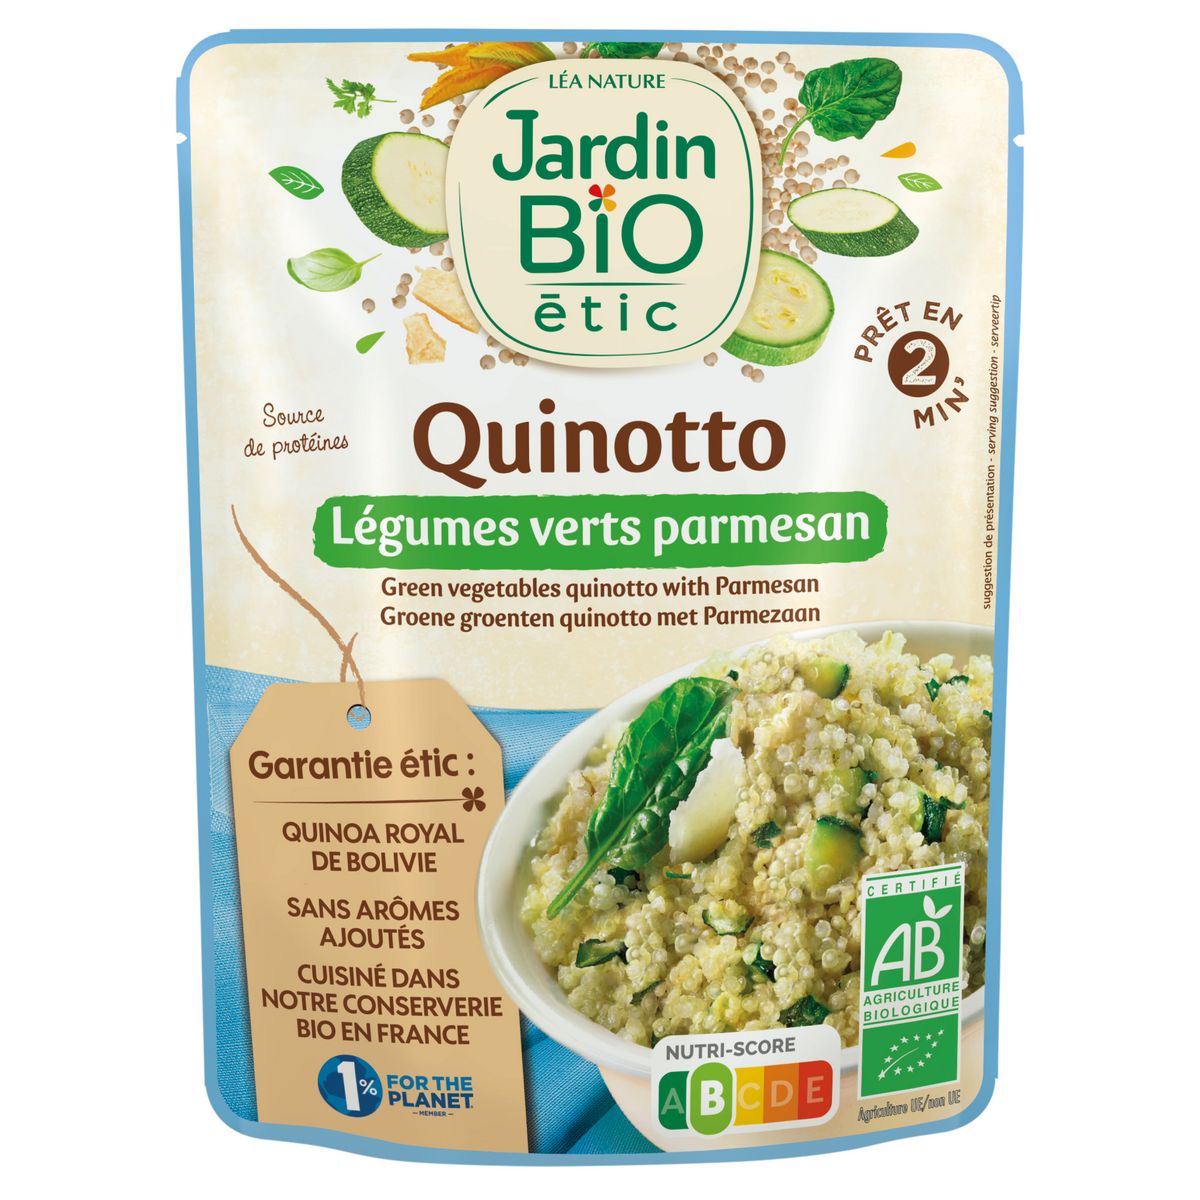 JARDIN BIO ETIC Quinotto légumes verts parmesan sachet express 220g